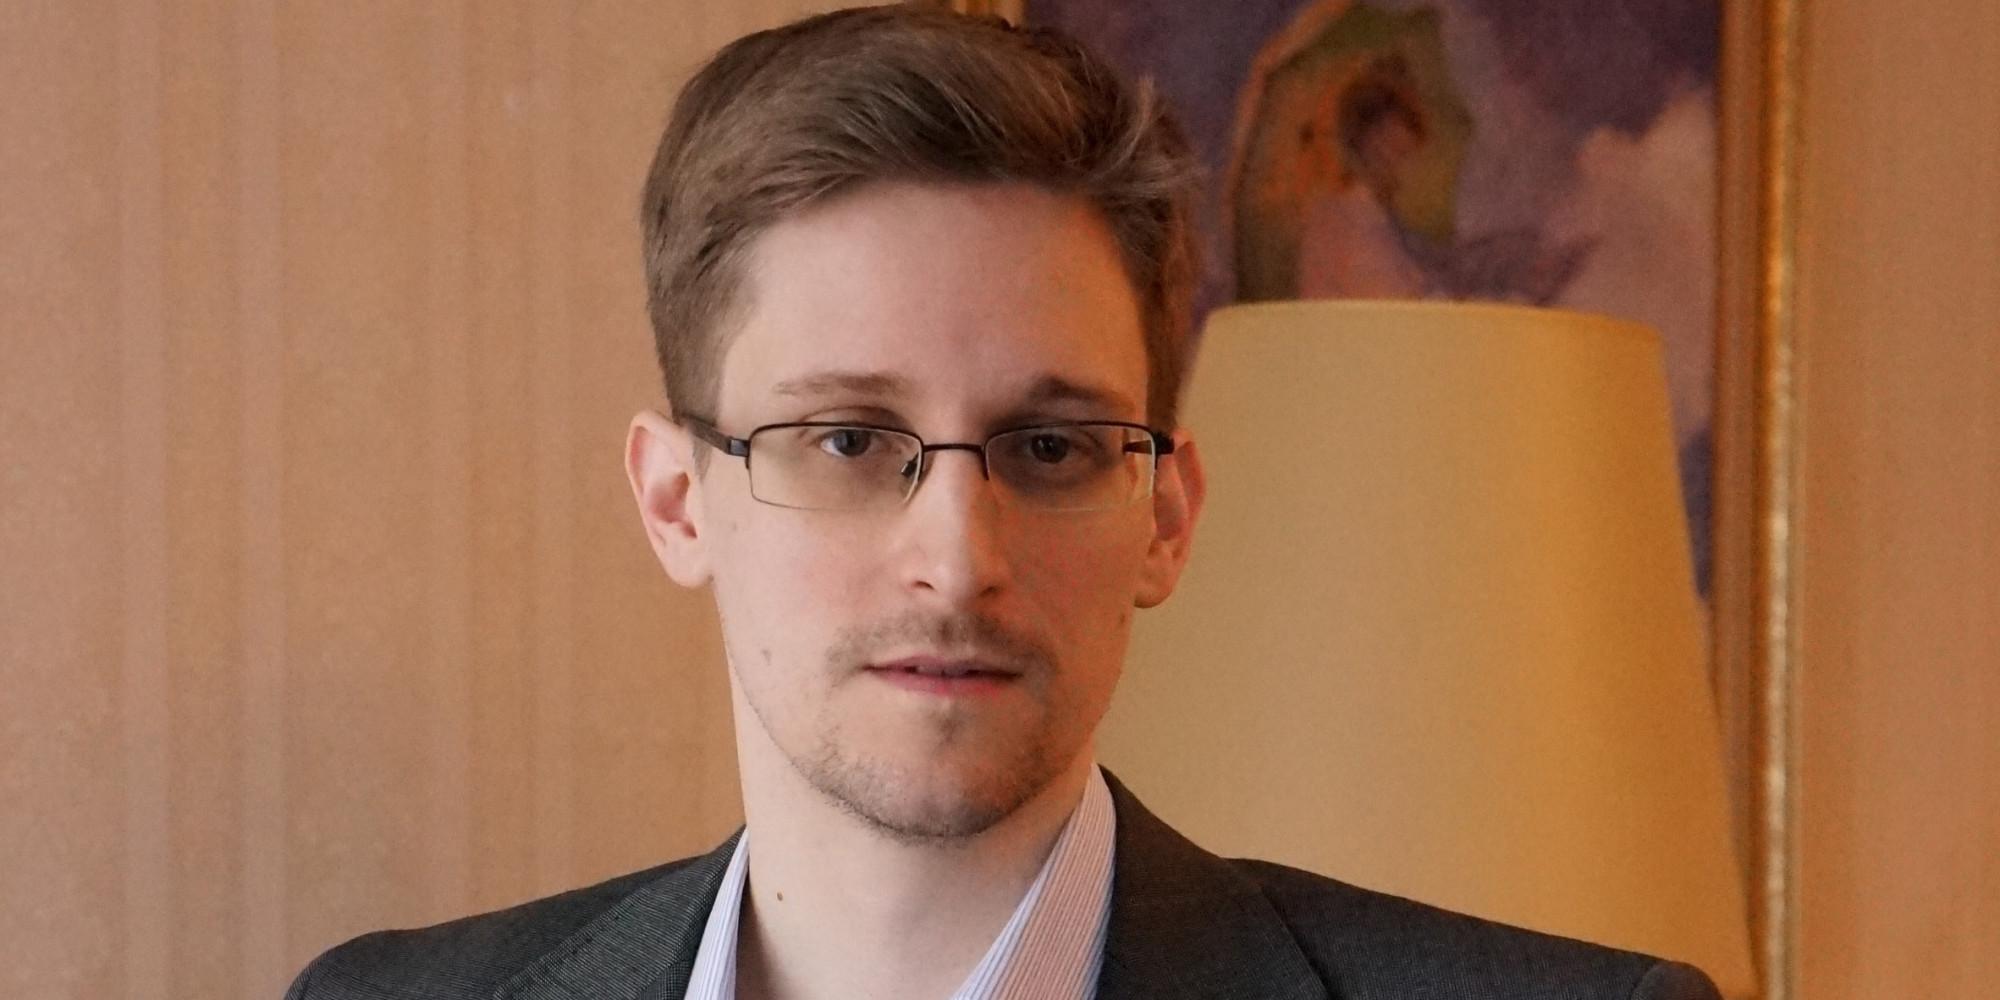 Edward Snowden Wallpaper